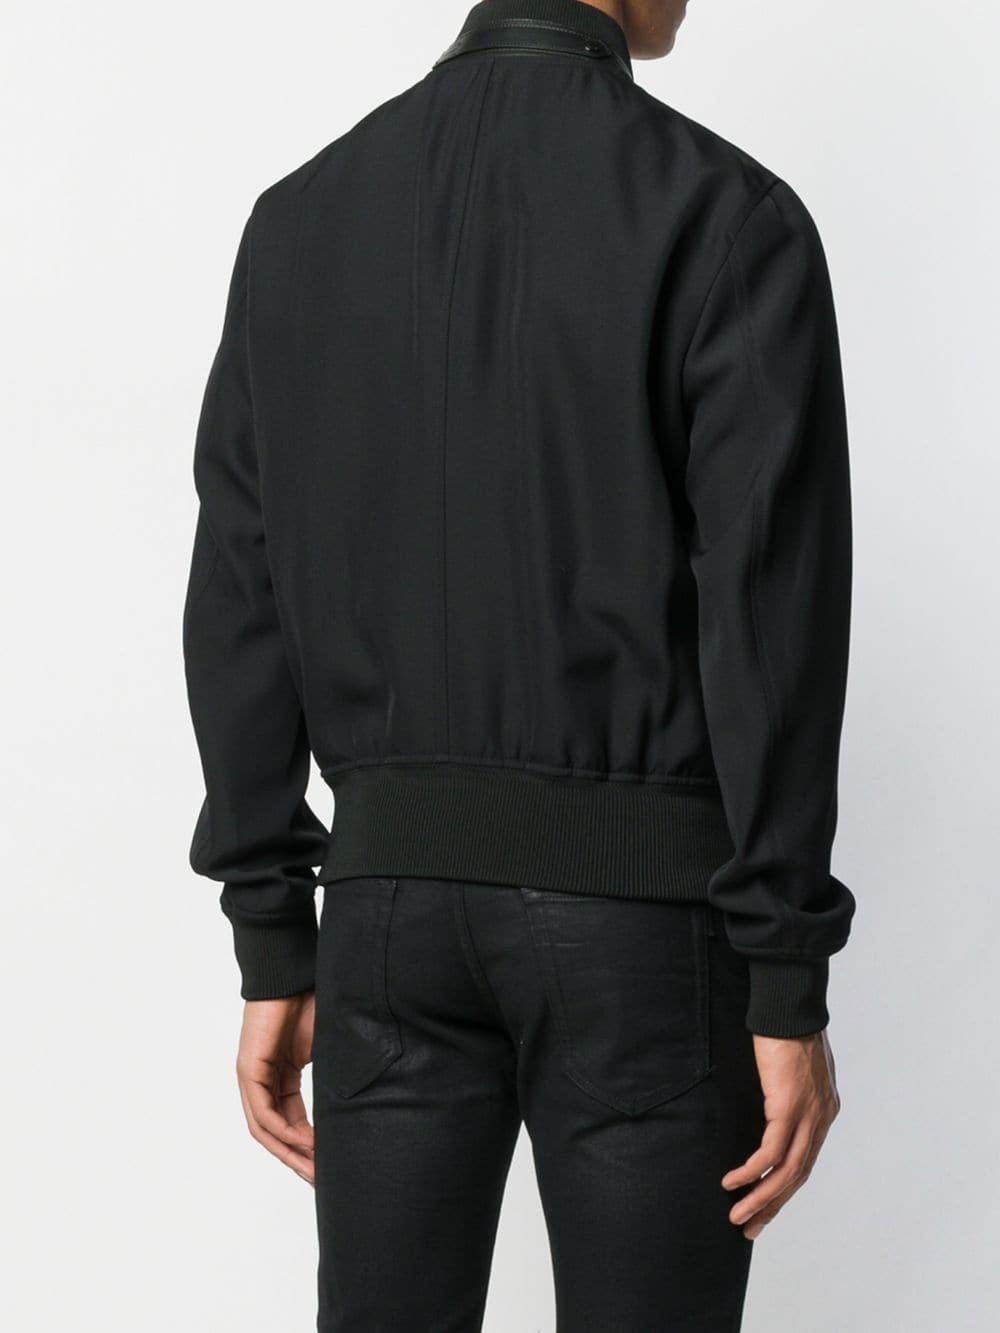 Tom Ford Wool Harrington Jacket in Black for Men | Lyst